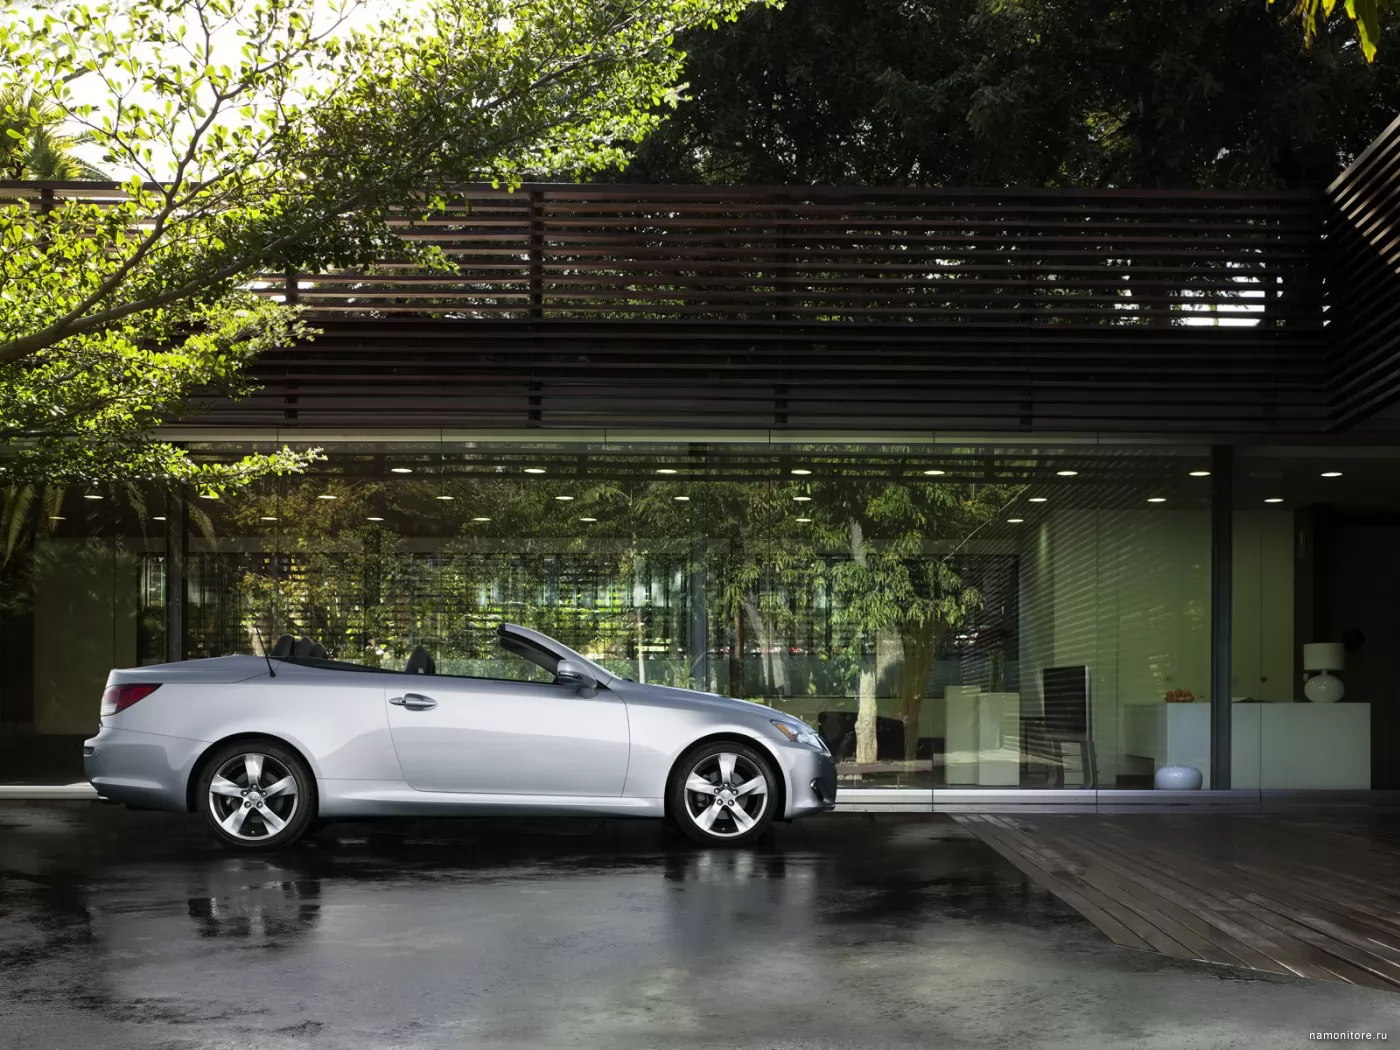 Серебристый Lexus IS250C без крыши, Lexus, автомобили, кабриолет, серебристое, техника х